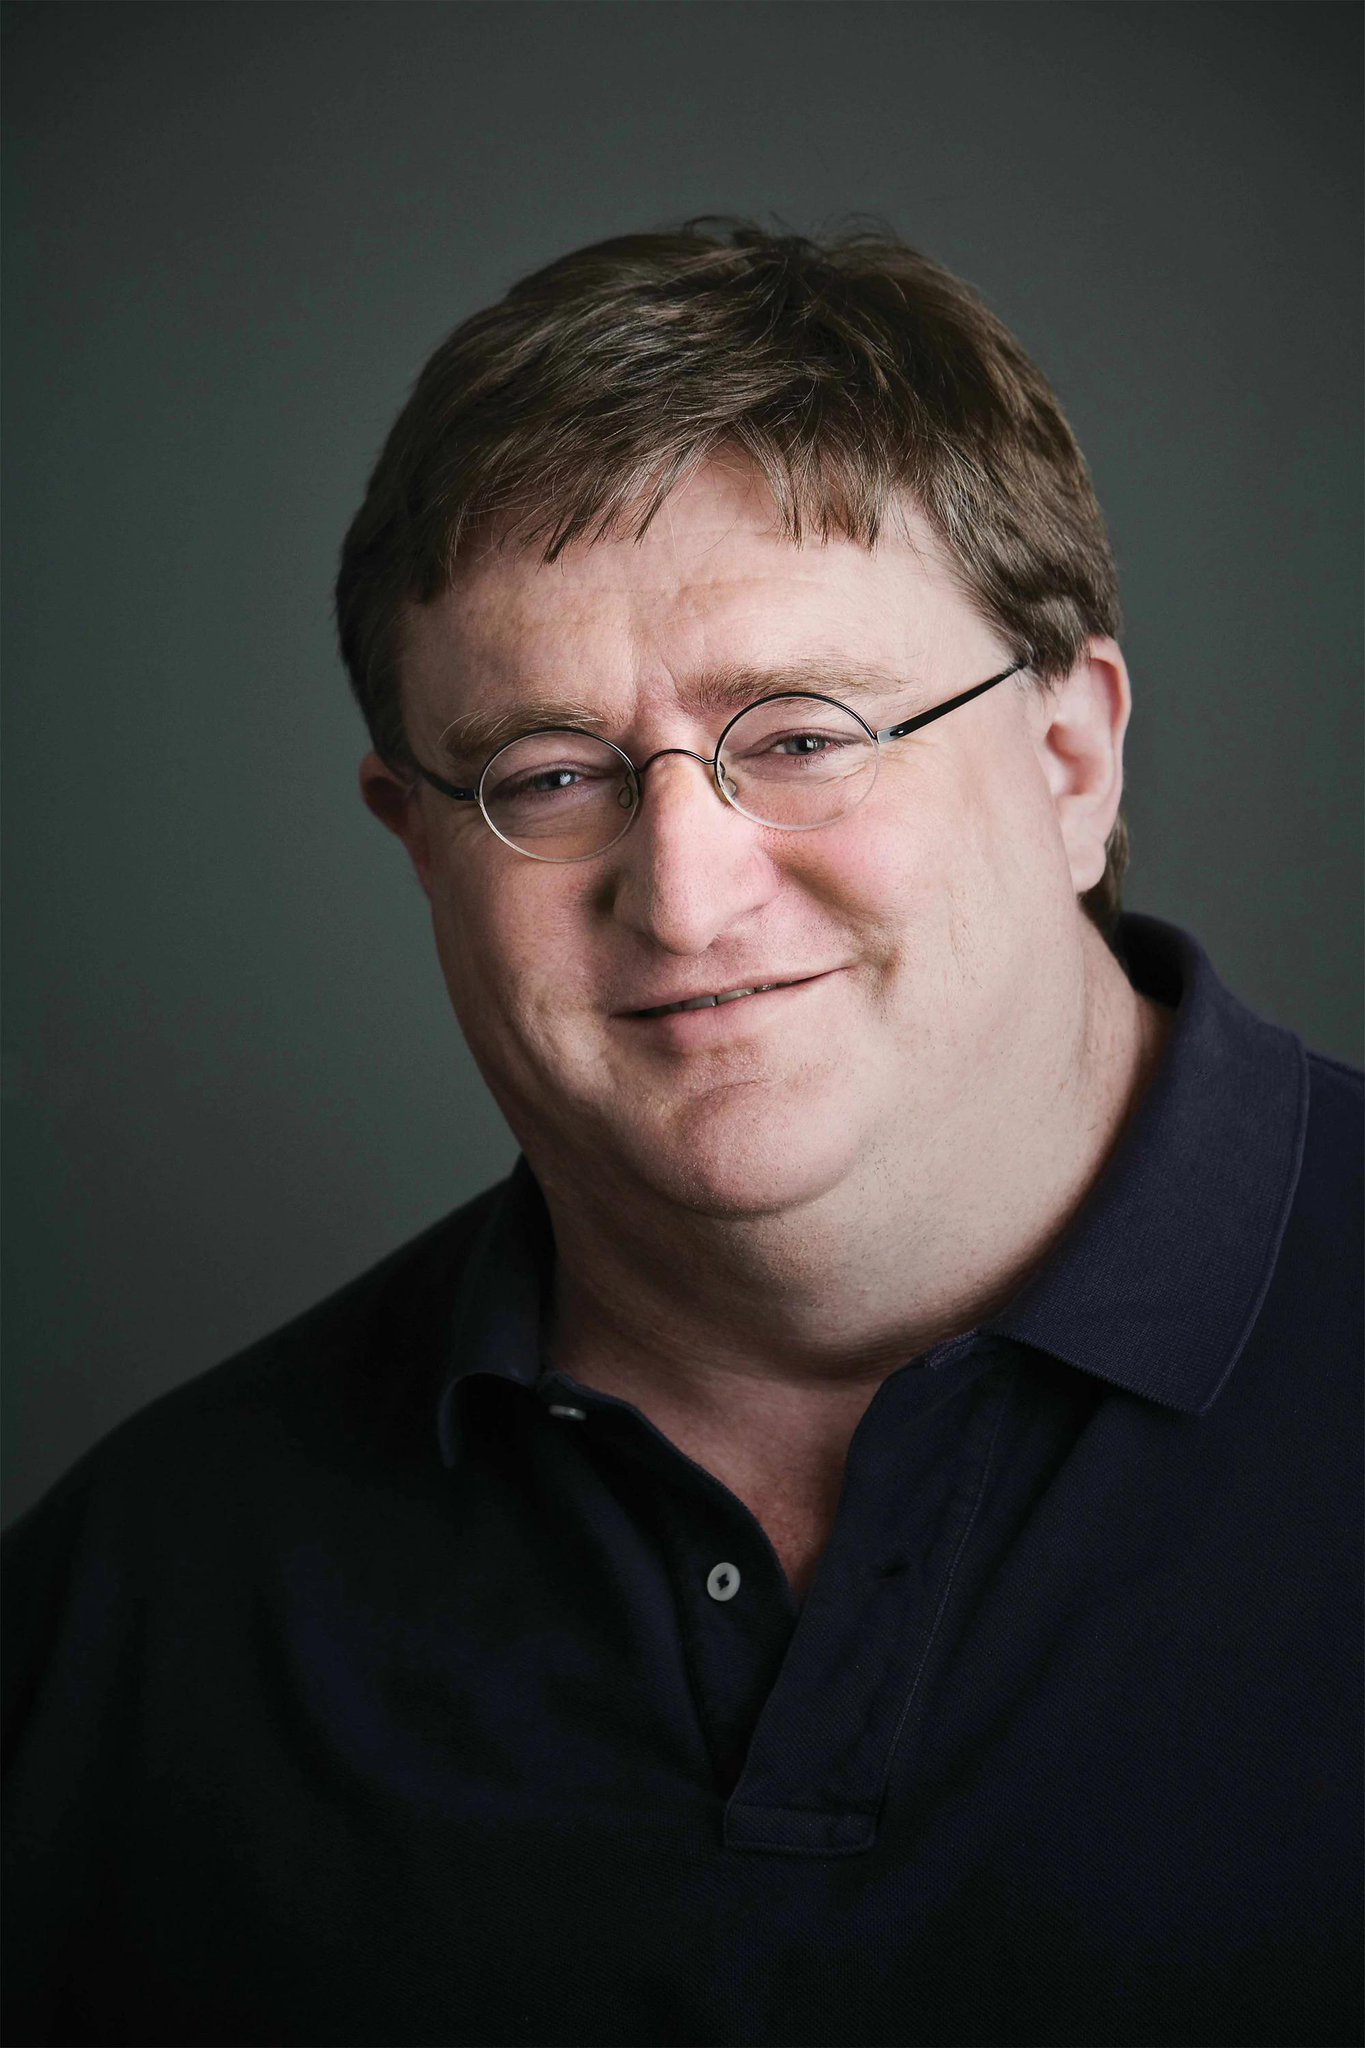 Happy birthday to Gabe Newell!  